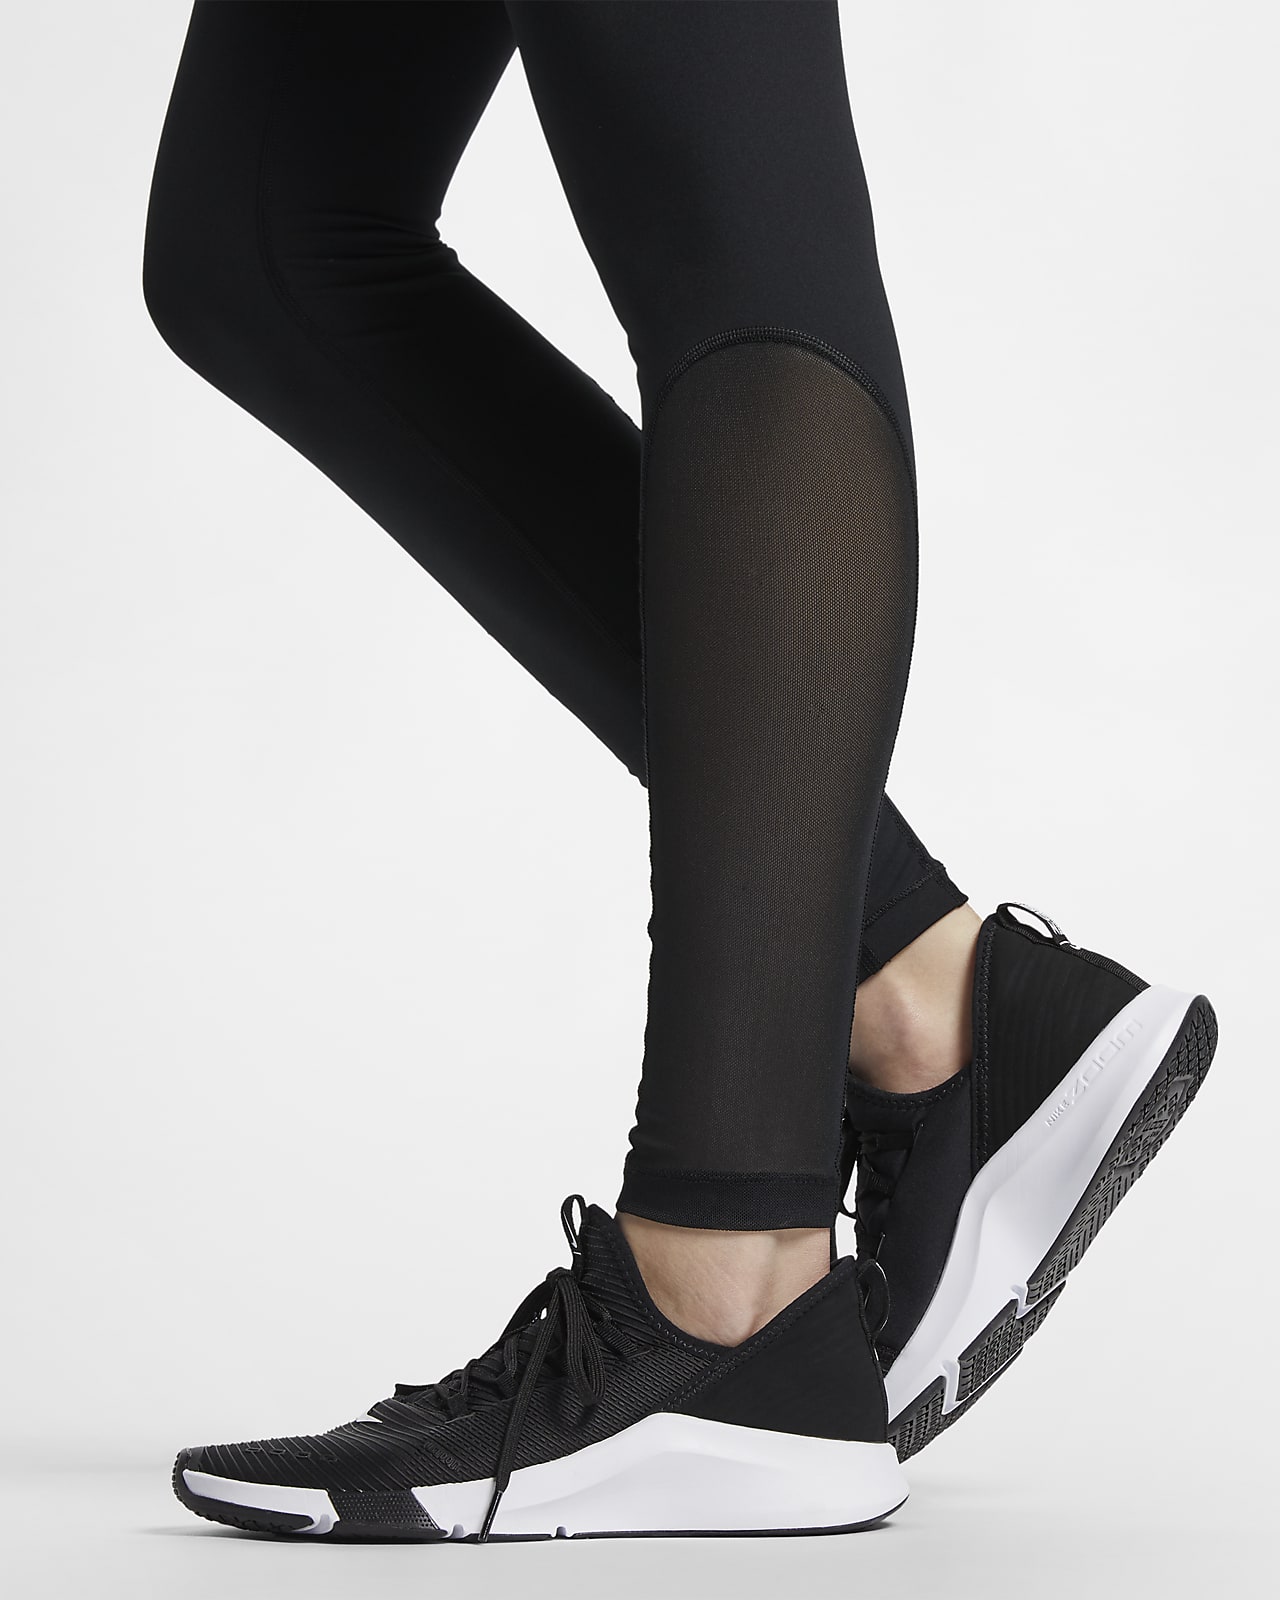 Nike Womens Pro Training Tight Fit Athletic Leggings